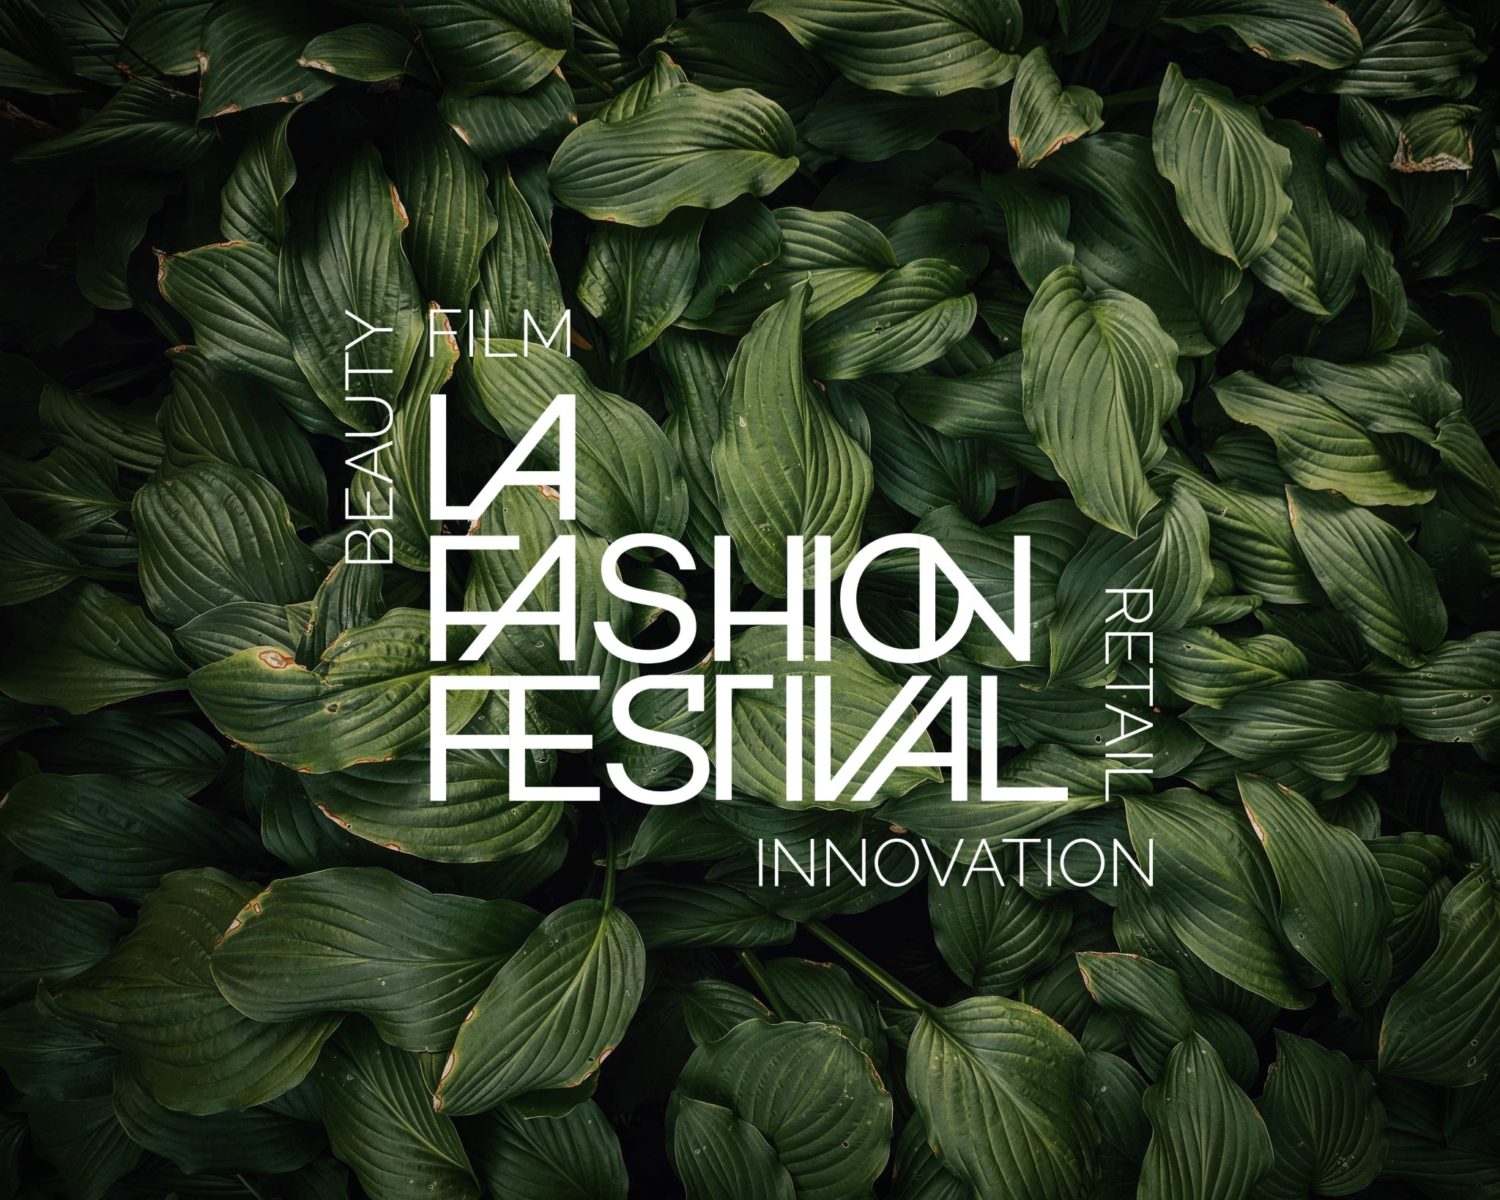 LA Fashion Festival 2019: Sustainability